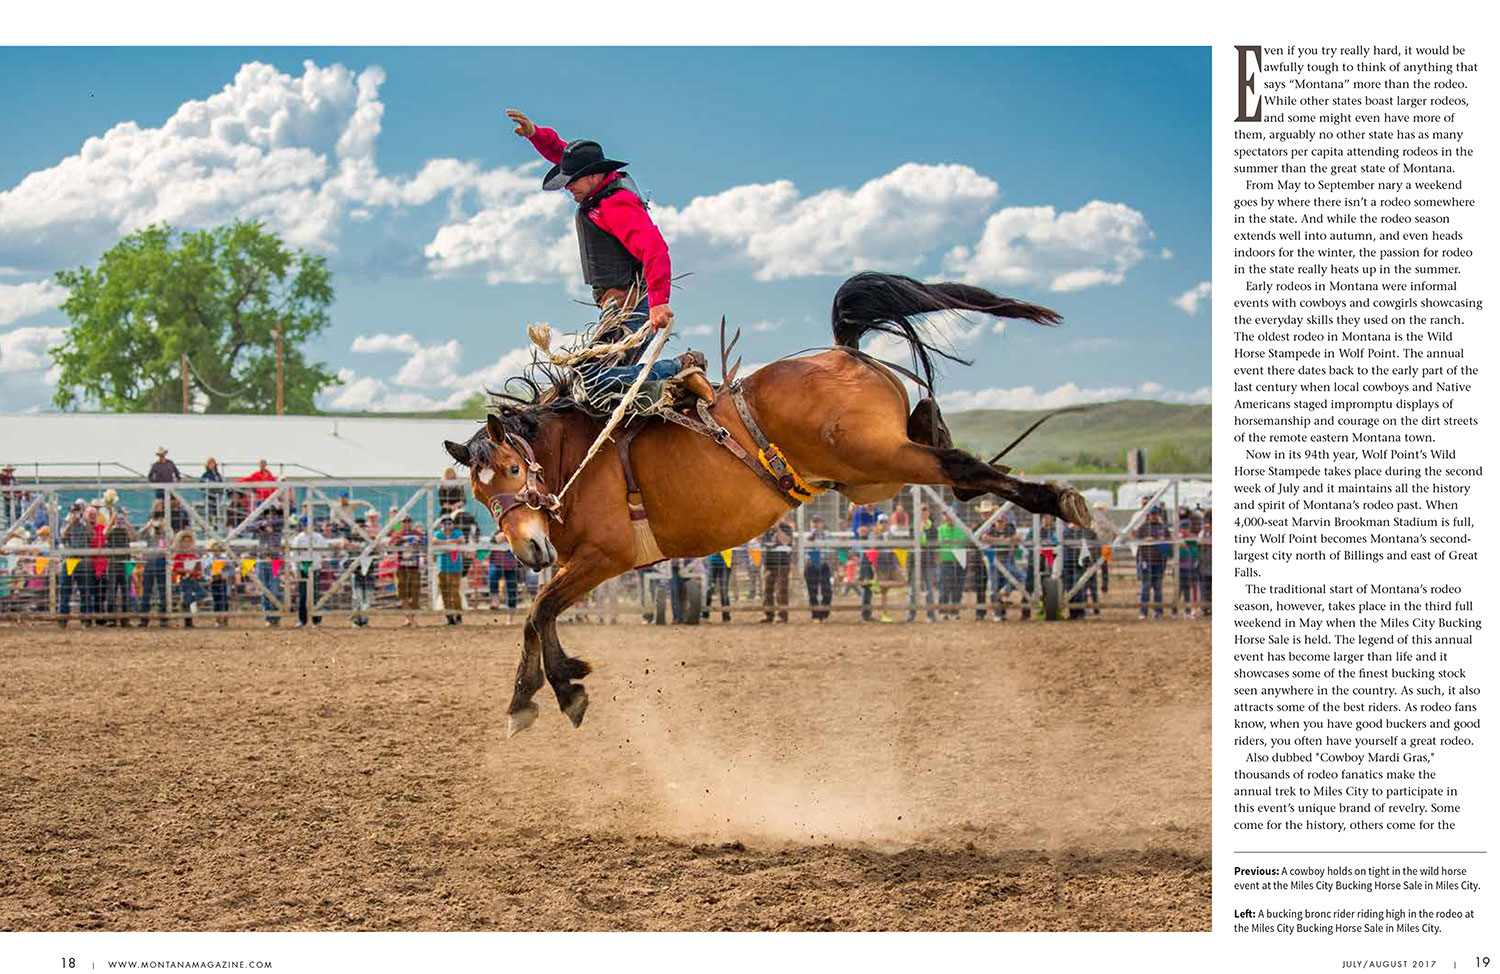 Montana-Magazine-Photos-of-Rodeo-Photos-by-Todd-Klassy-02.jpg